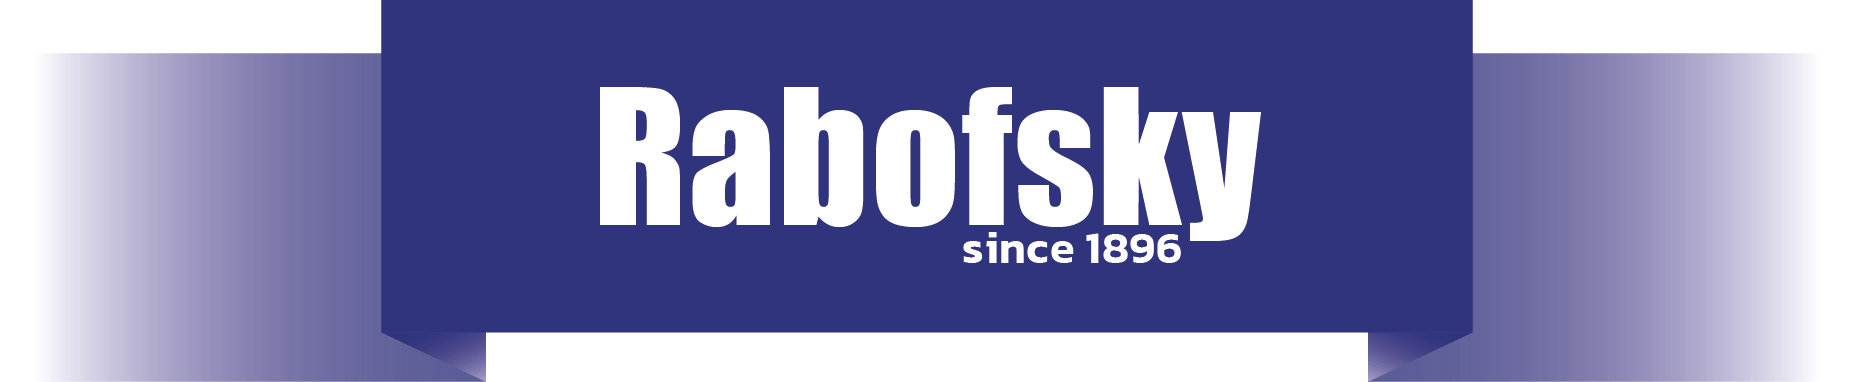 Karl Rabofsky GmbH